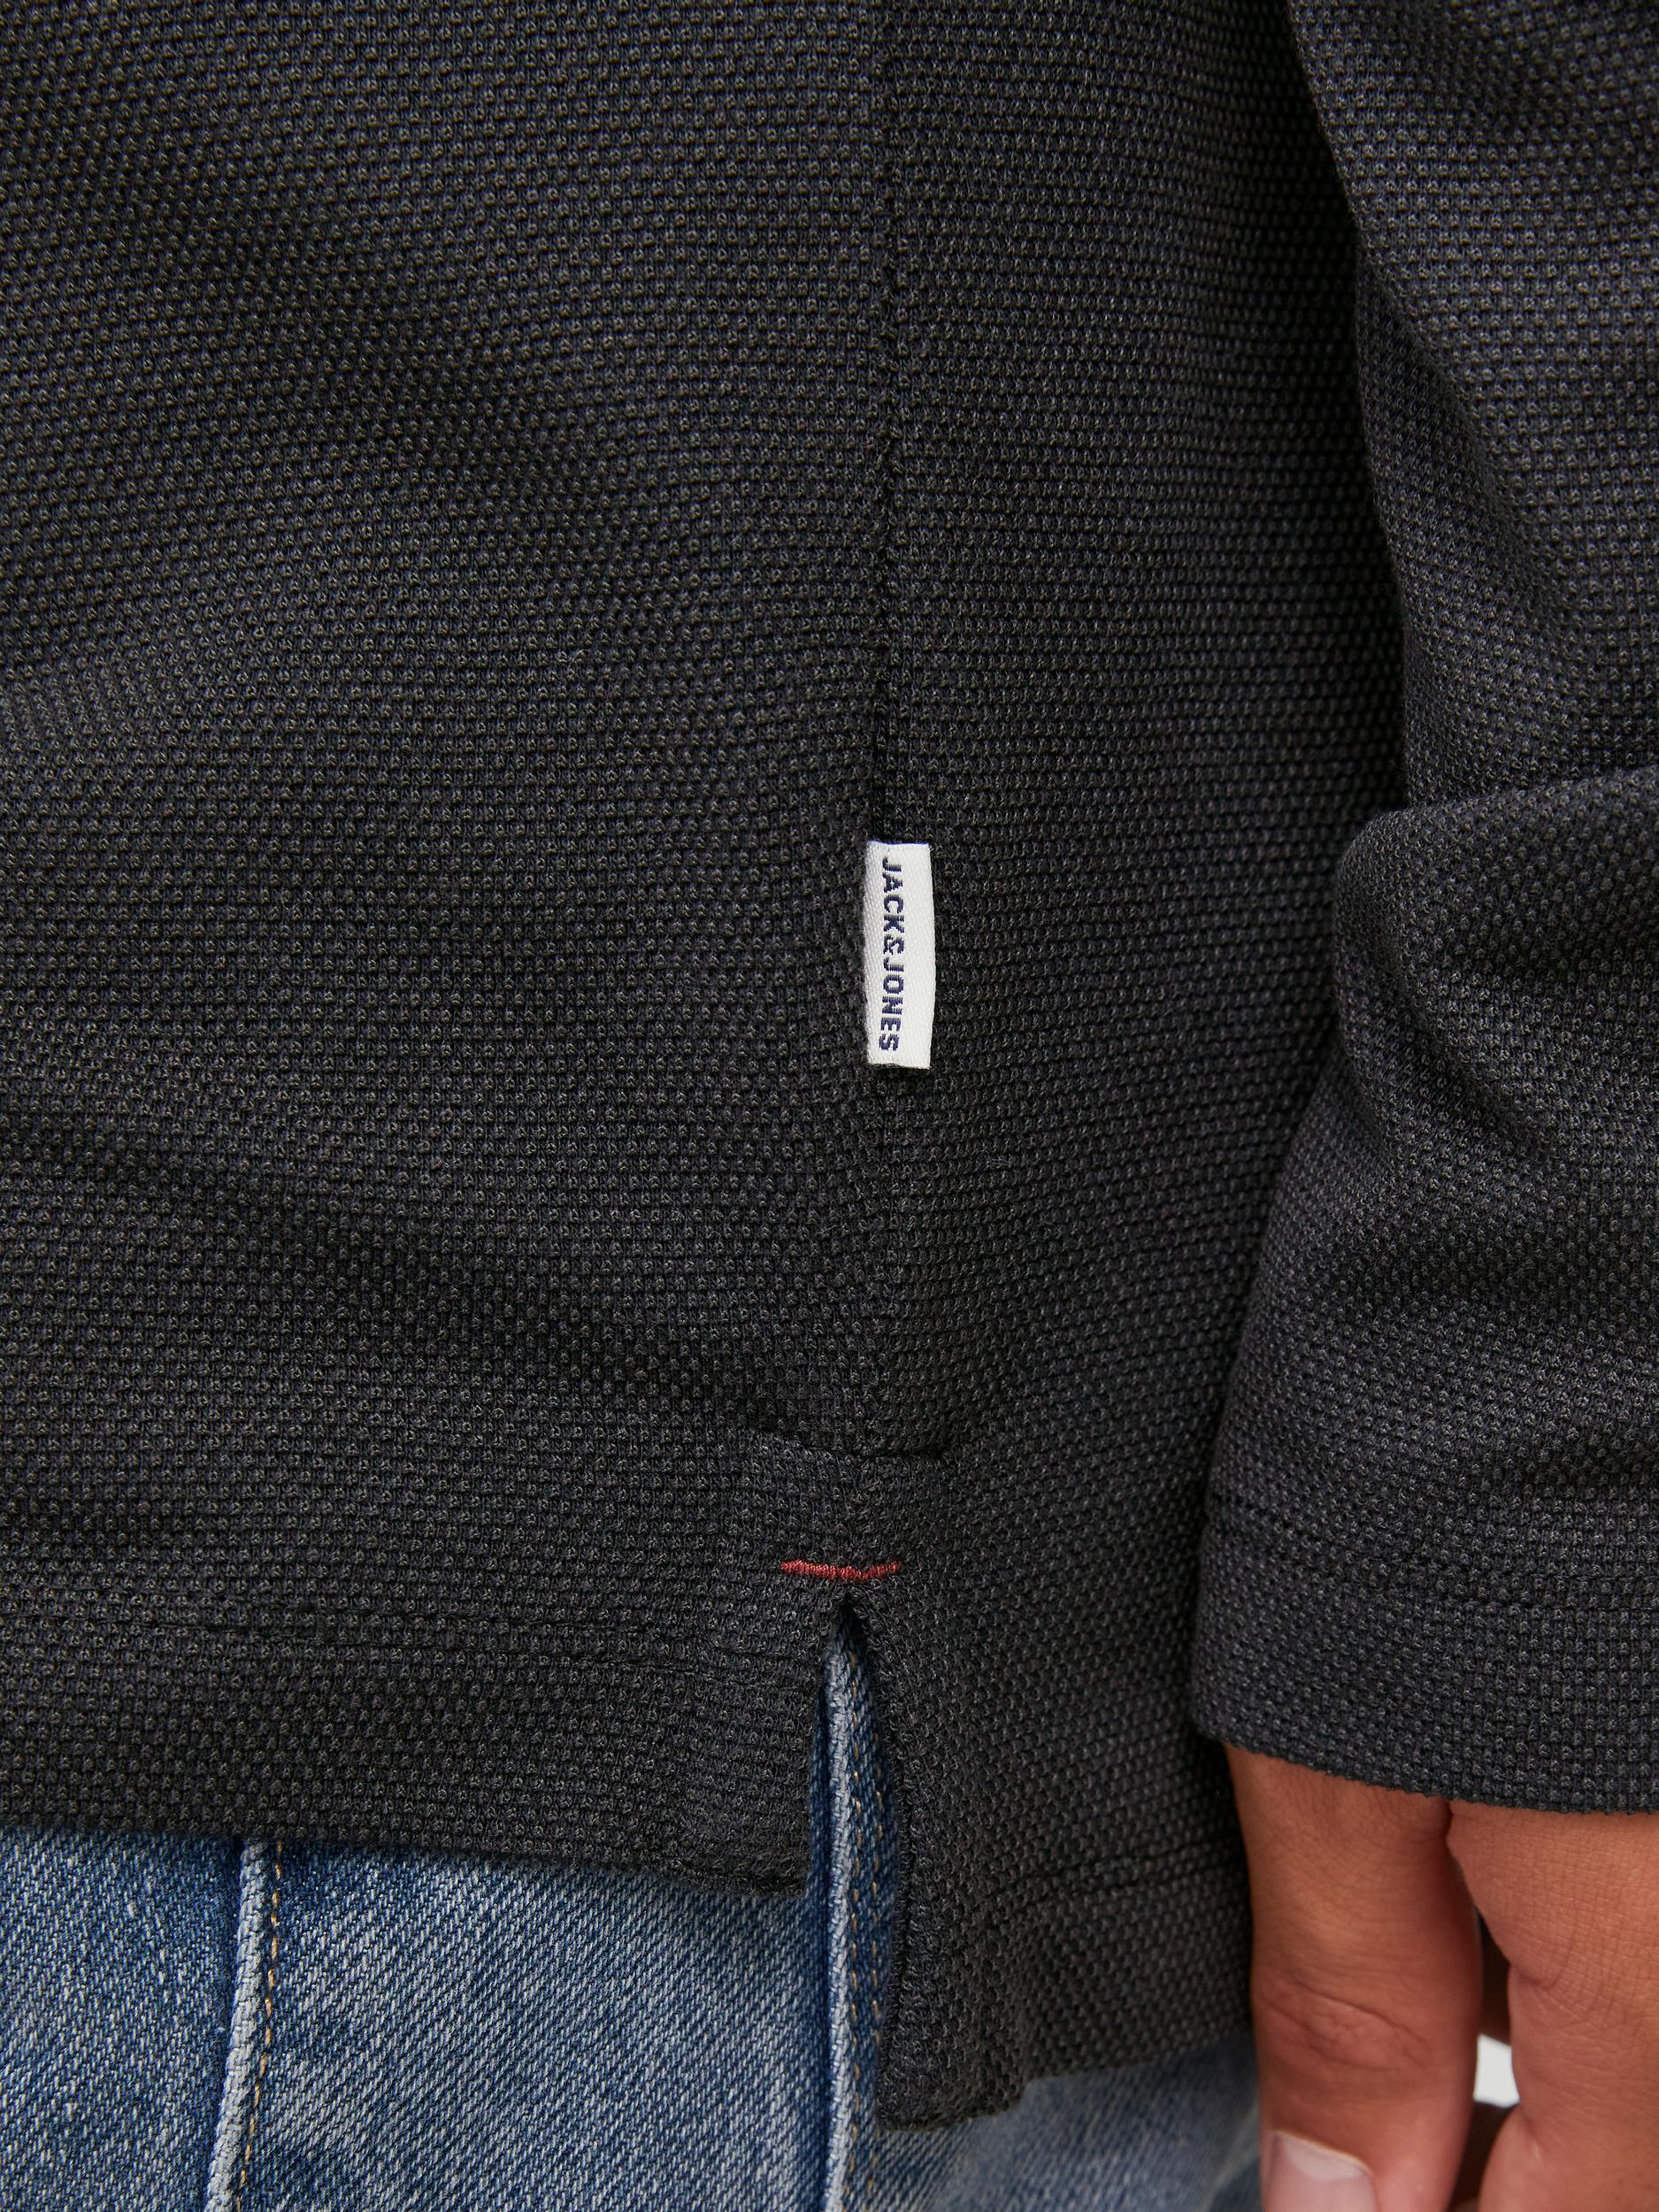 Men's Win Polo Long Sleeve-Black-Tab Logo View